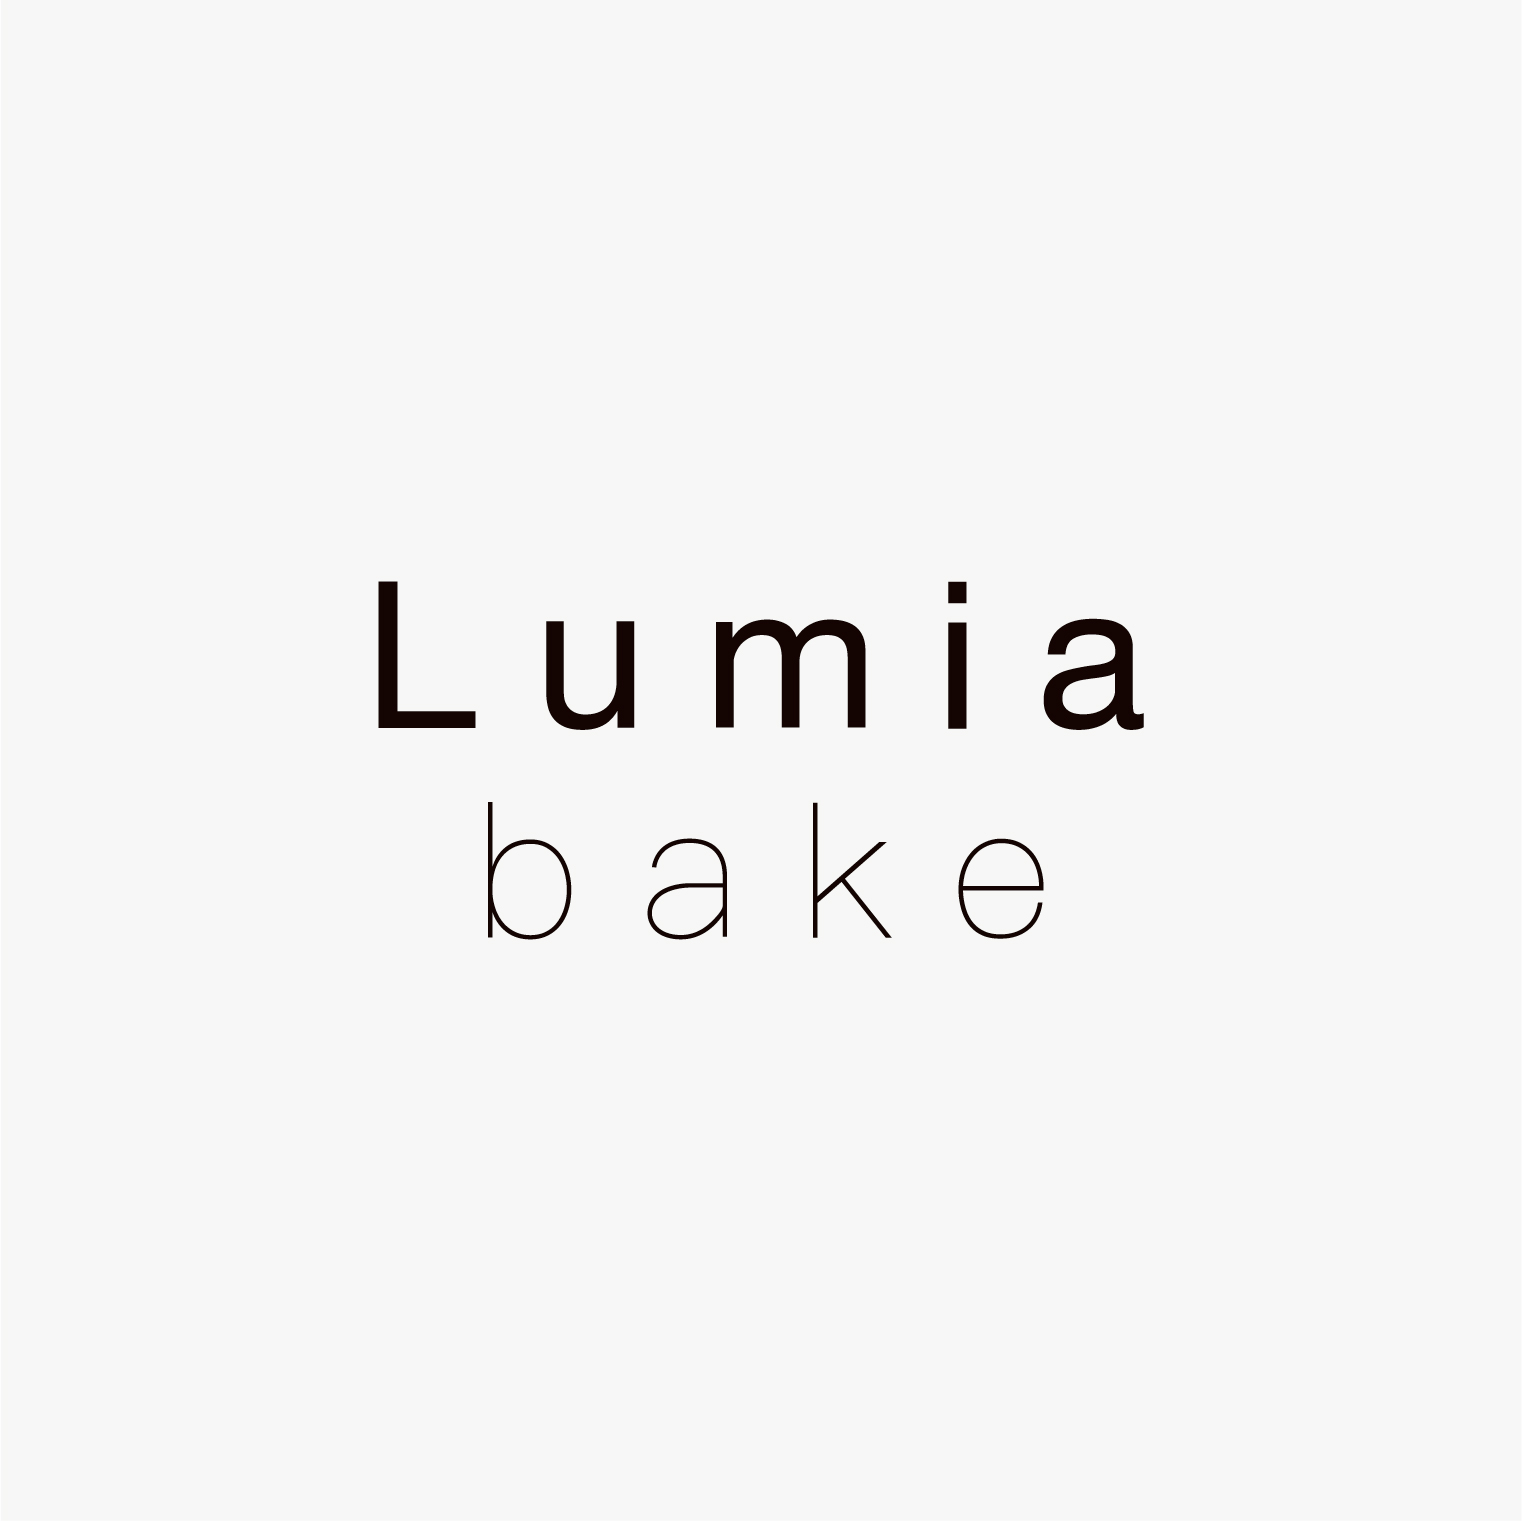 Lumia bake